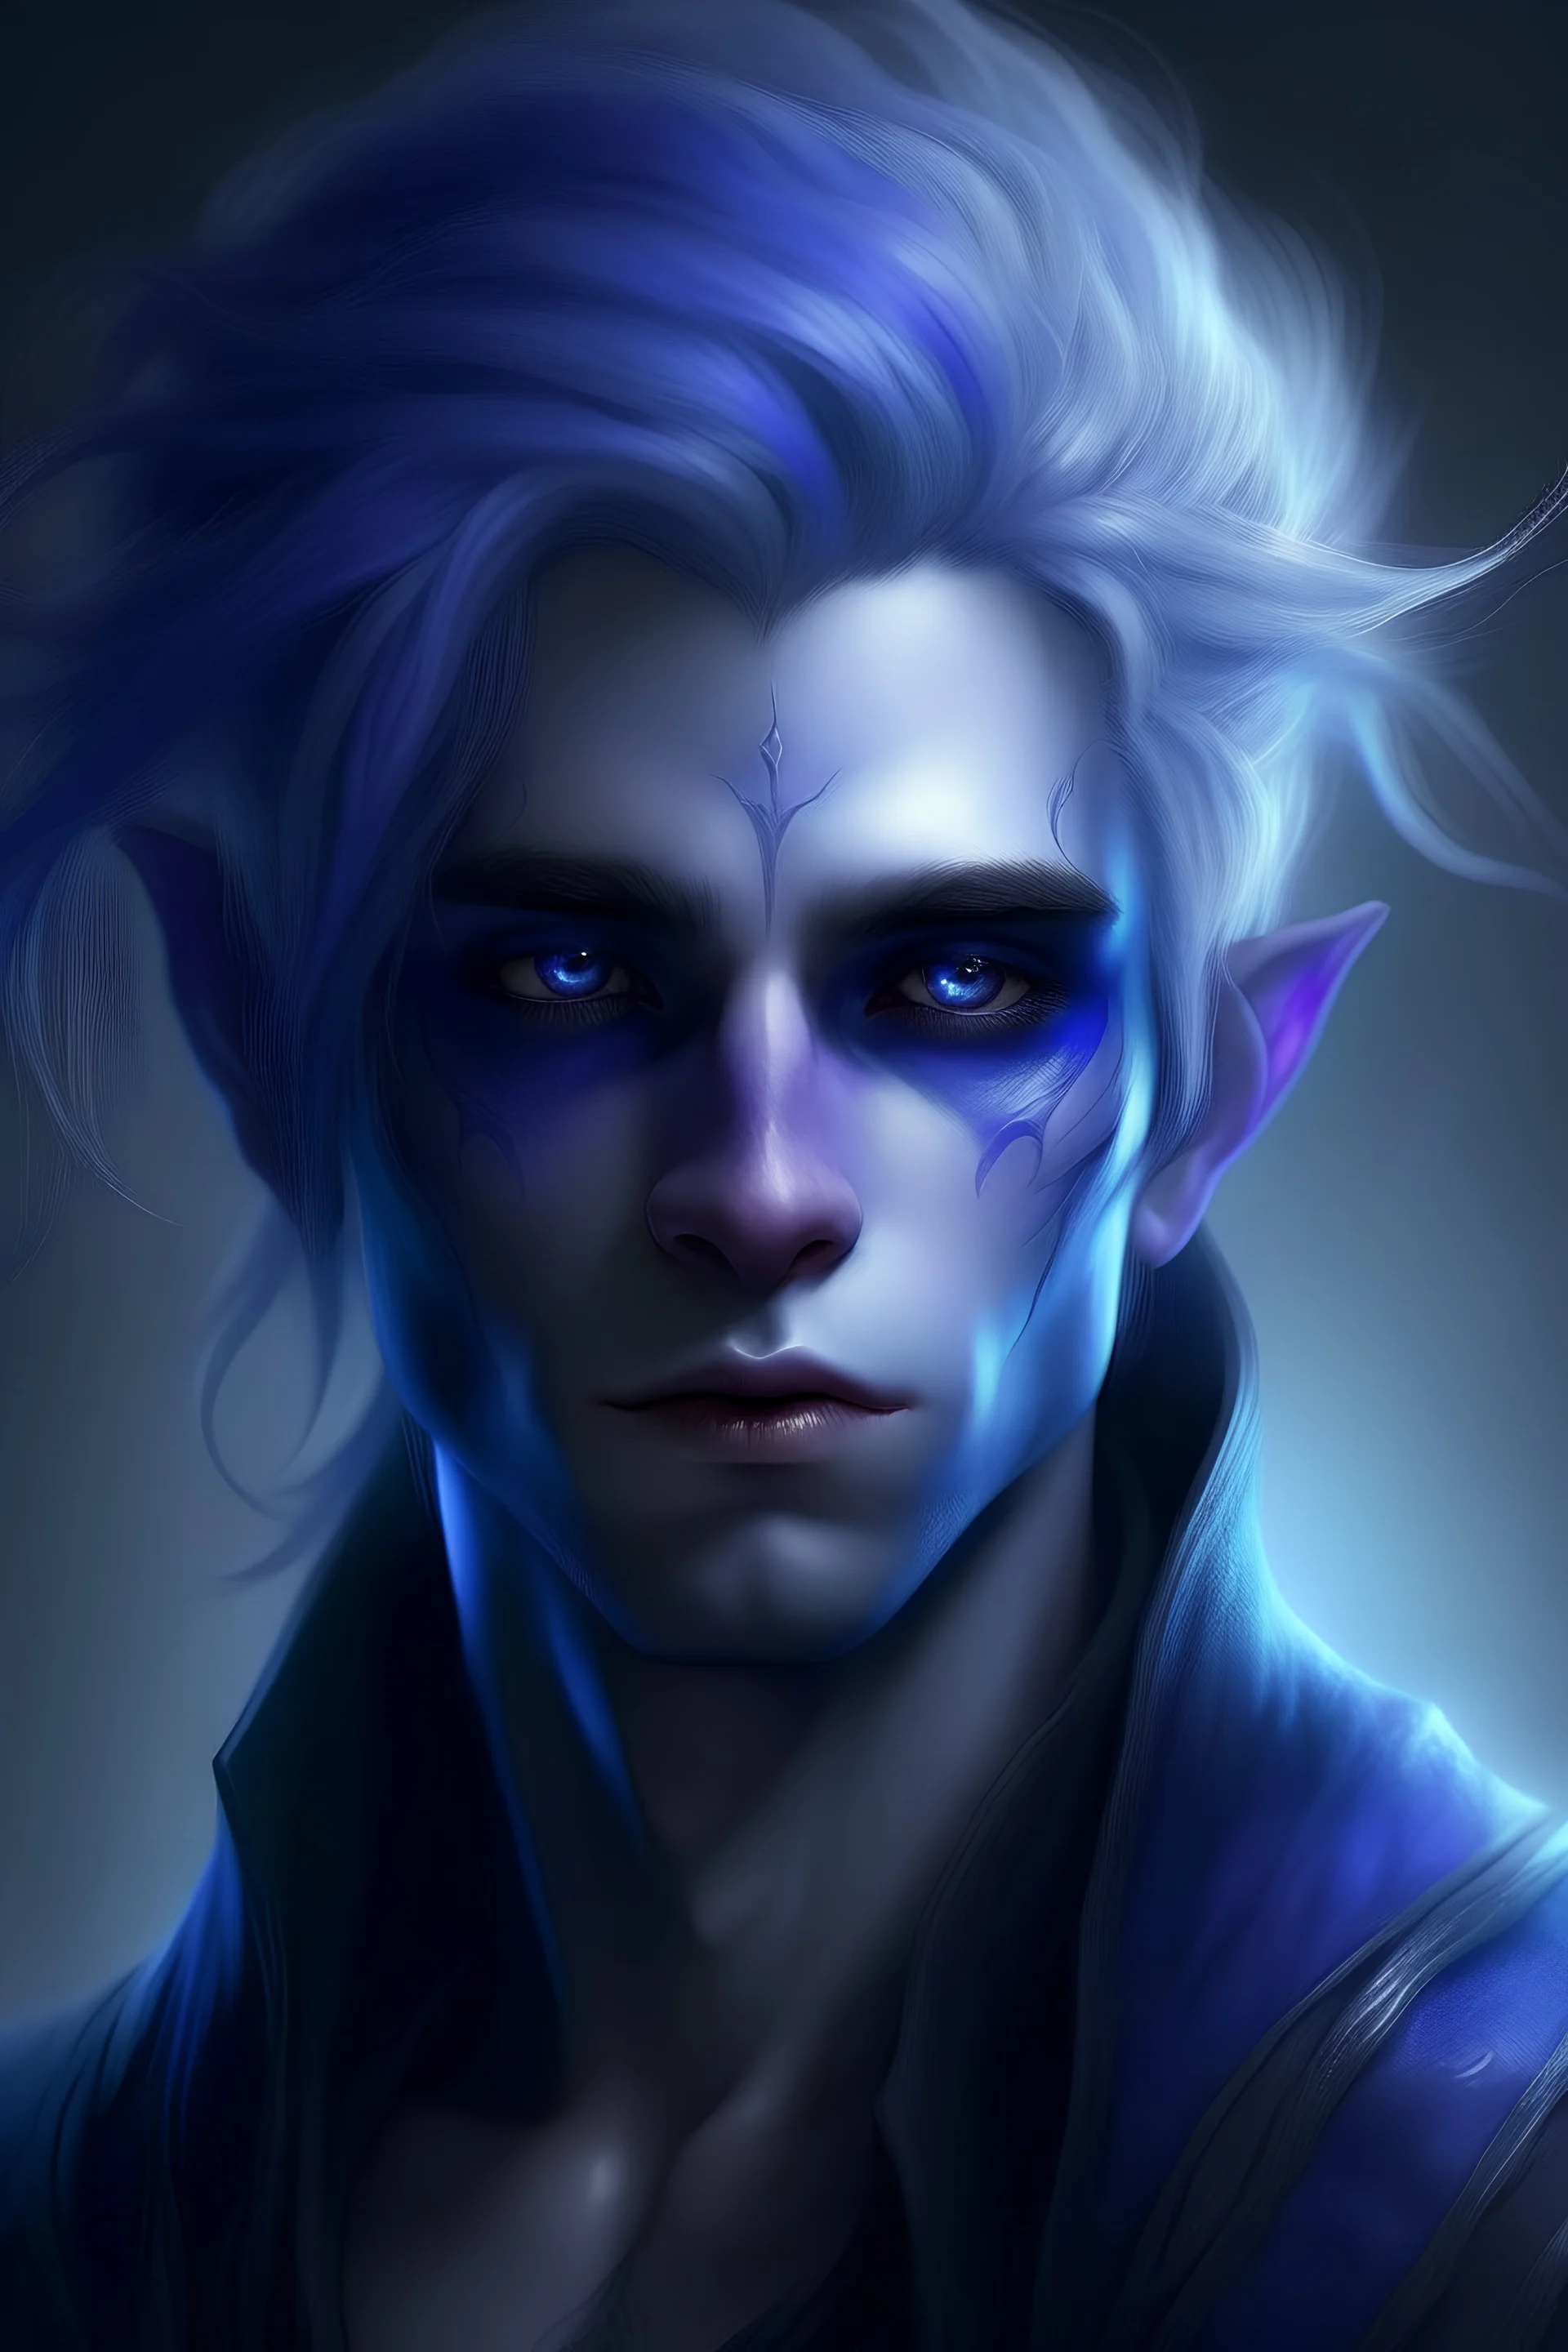 blue violet hair, blue eyes, pale, dark background, fog, elf, fantasy, male, soft facial features